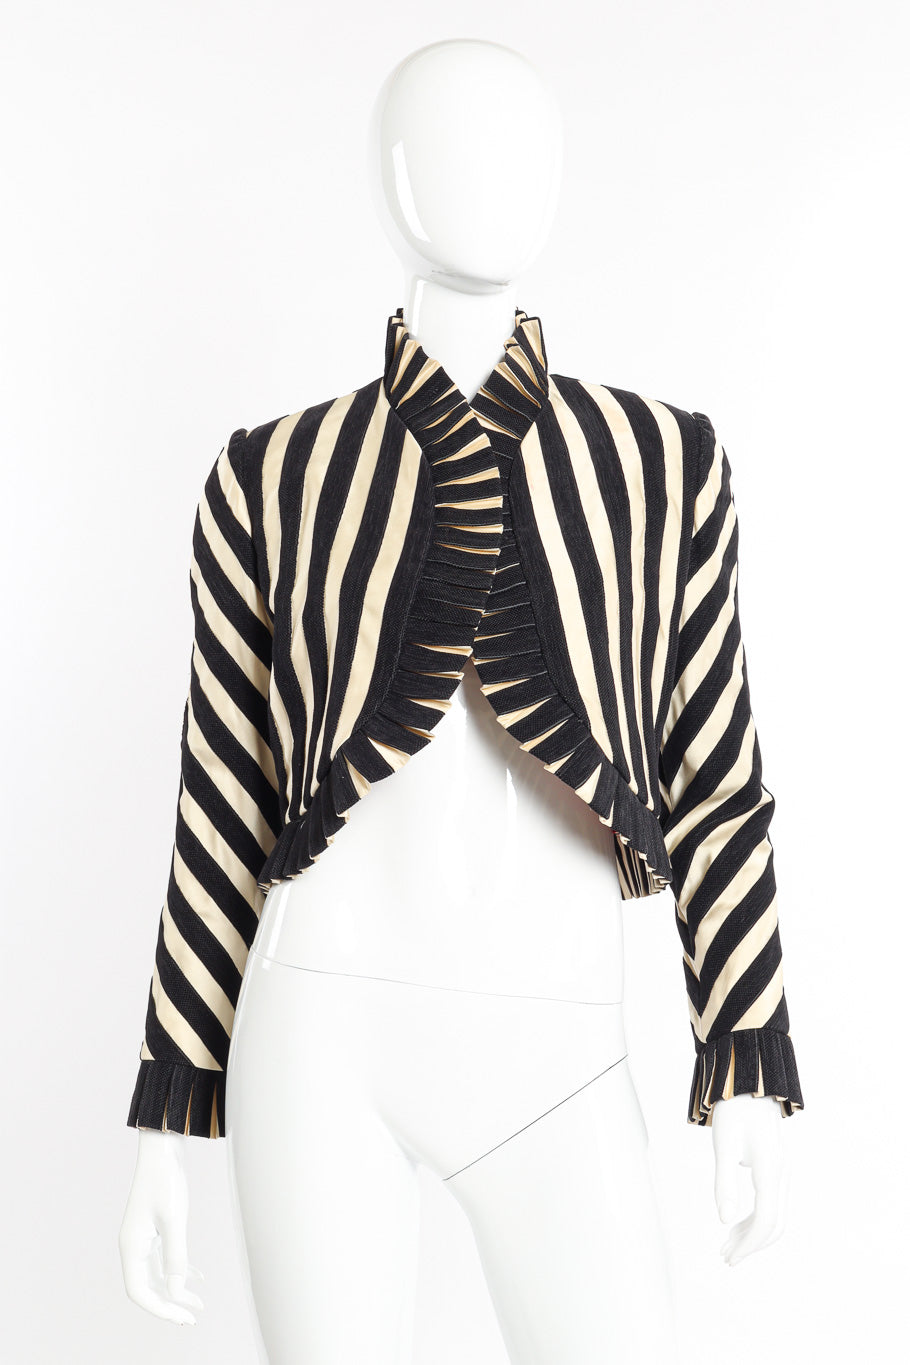 Vintage Bill Blass Striped Bolero Jacket front on mannequin @recessla